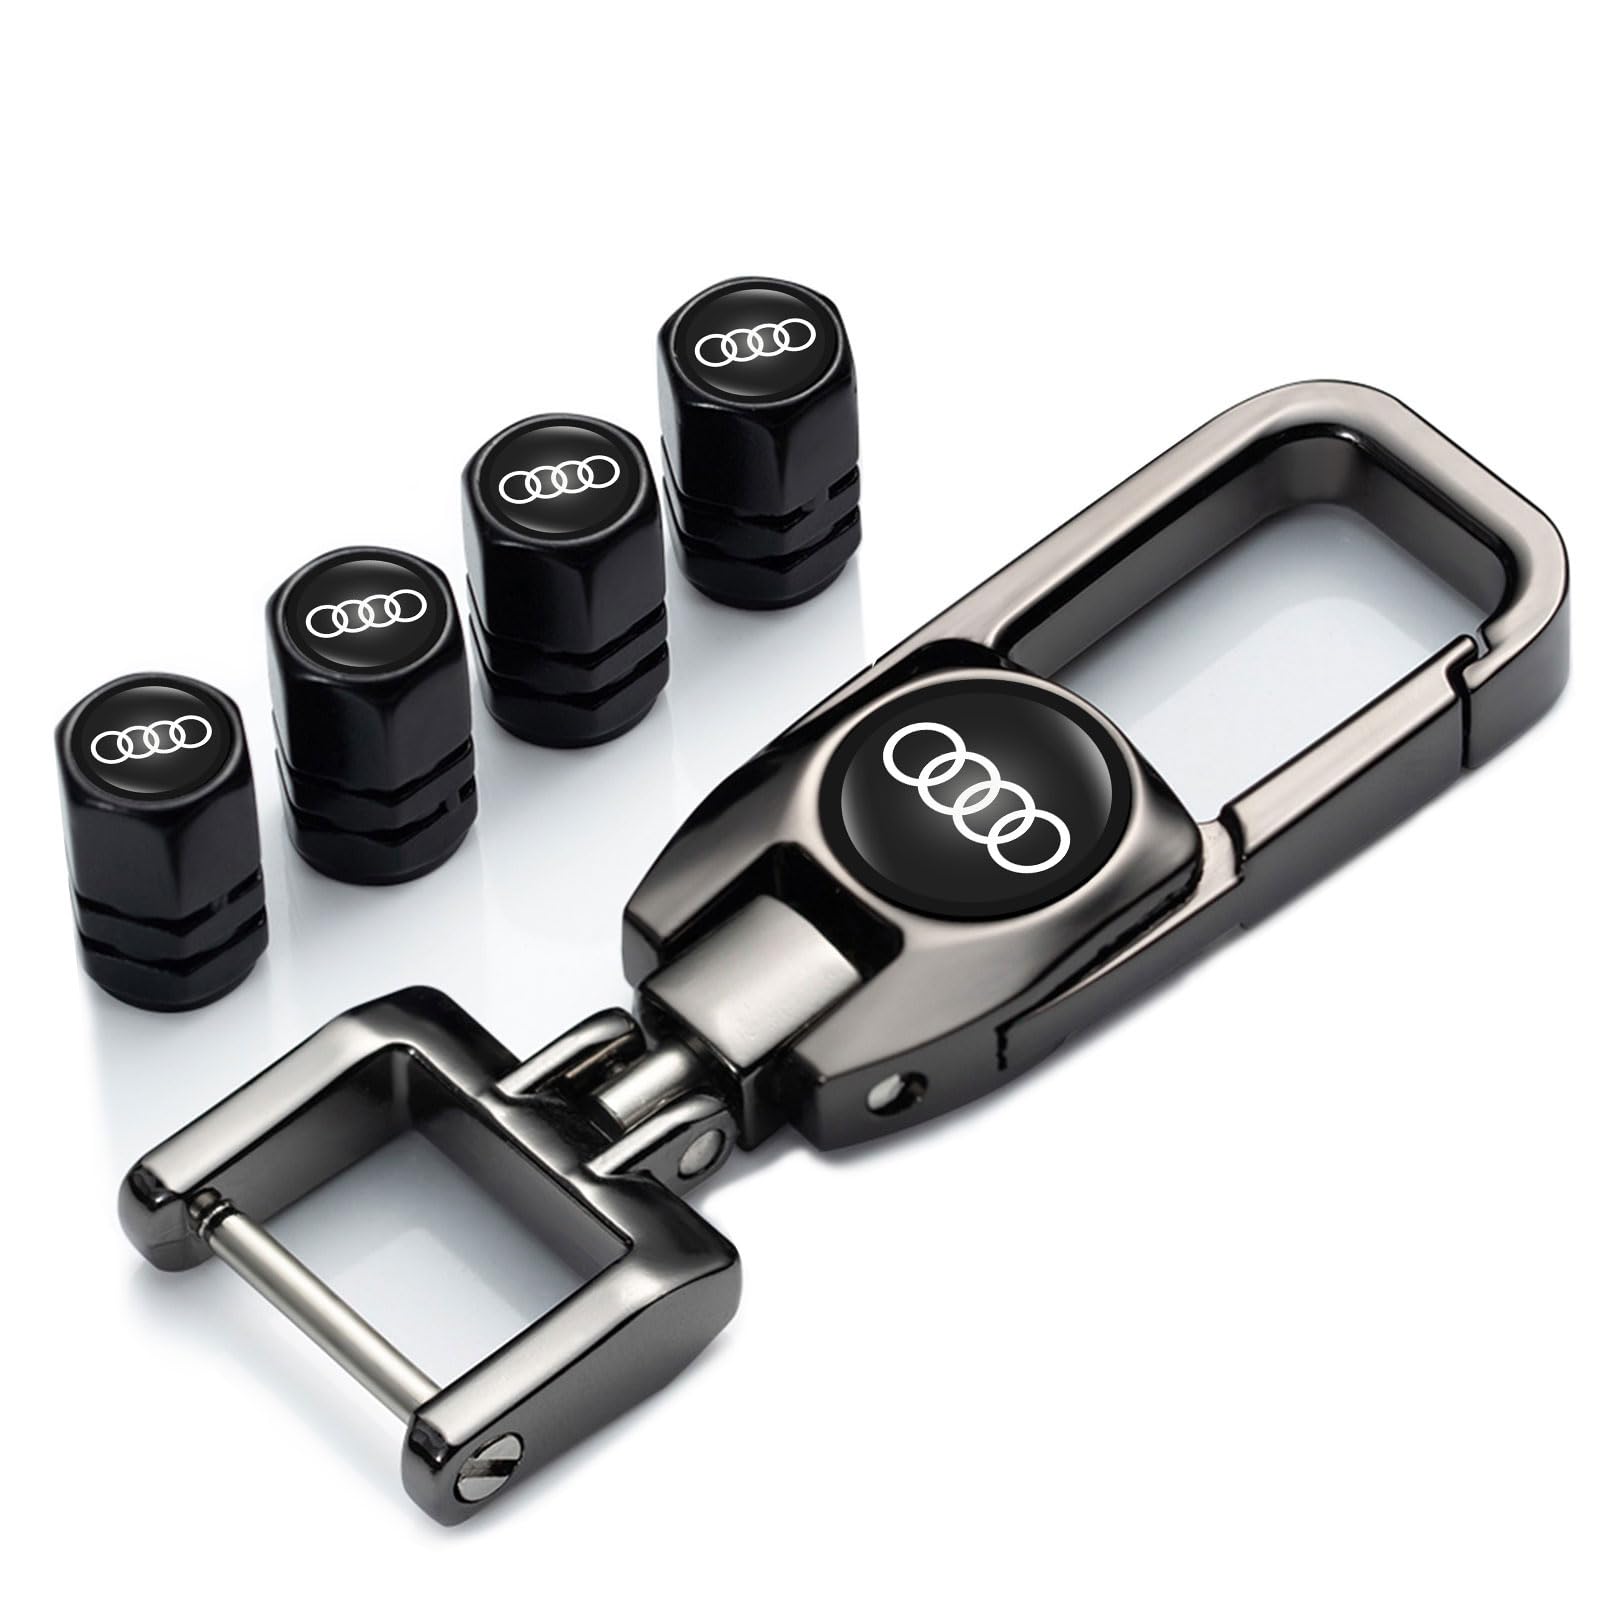 Auto Schlüsselanhänger mit 4PCS Ventilkappen, Legierung Schlüsselring und Ventilkappen Combo für Audi A1 A3 RS3 A4 A5 A6 A7 RS7 A8 Q3 Q5 Q7 R8,Schwarz von ncrftey